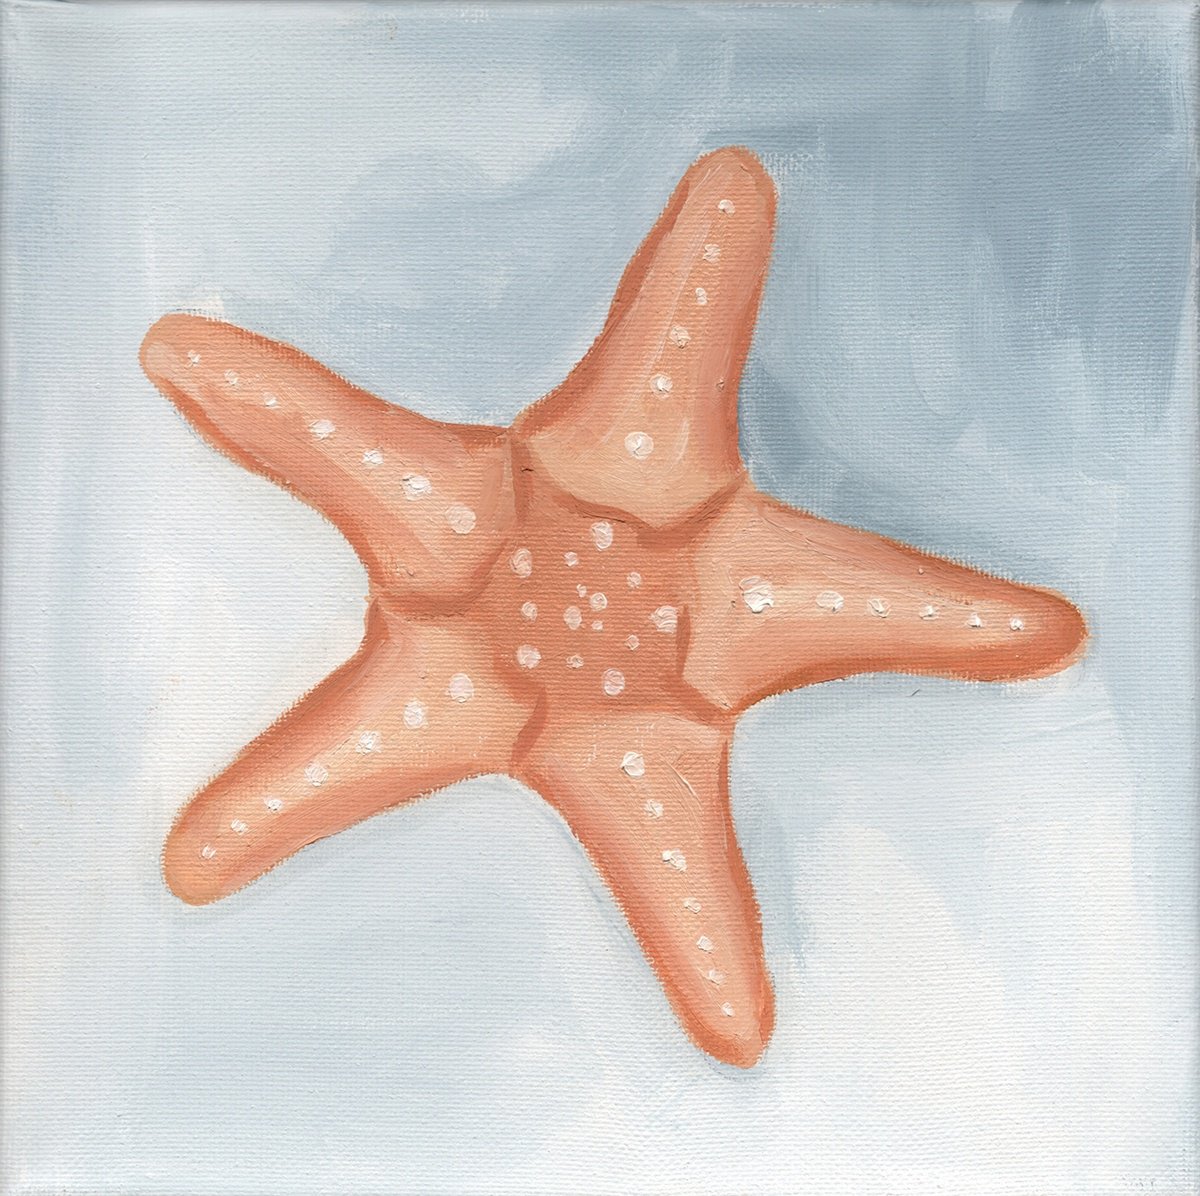 Starfish by Nagore Rodriguez